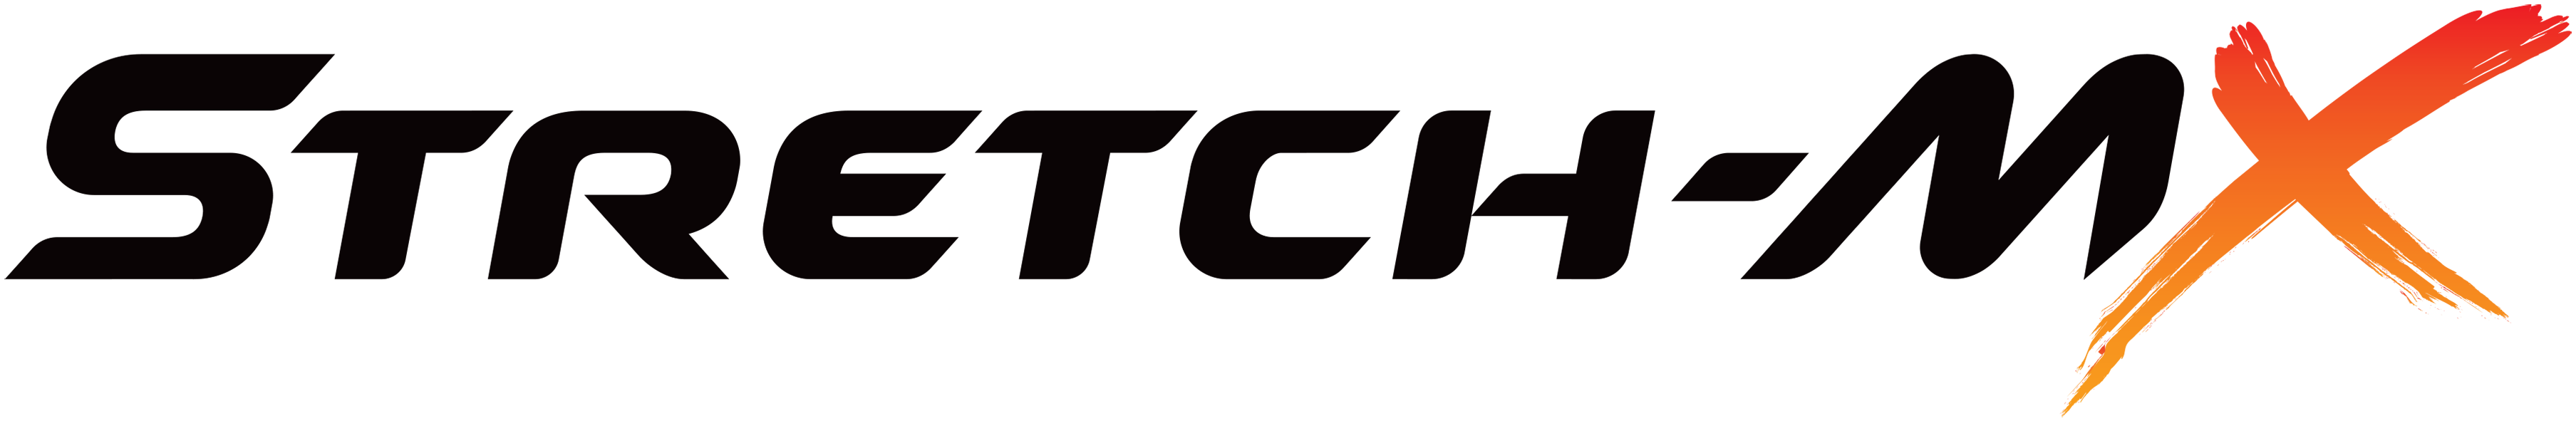 Stretch MX Logo Black Letters